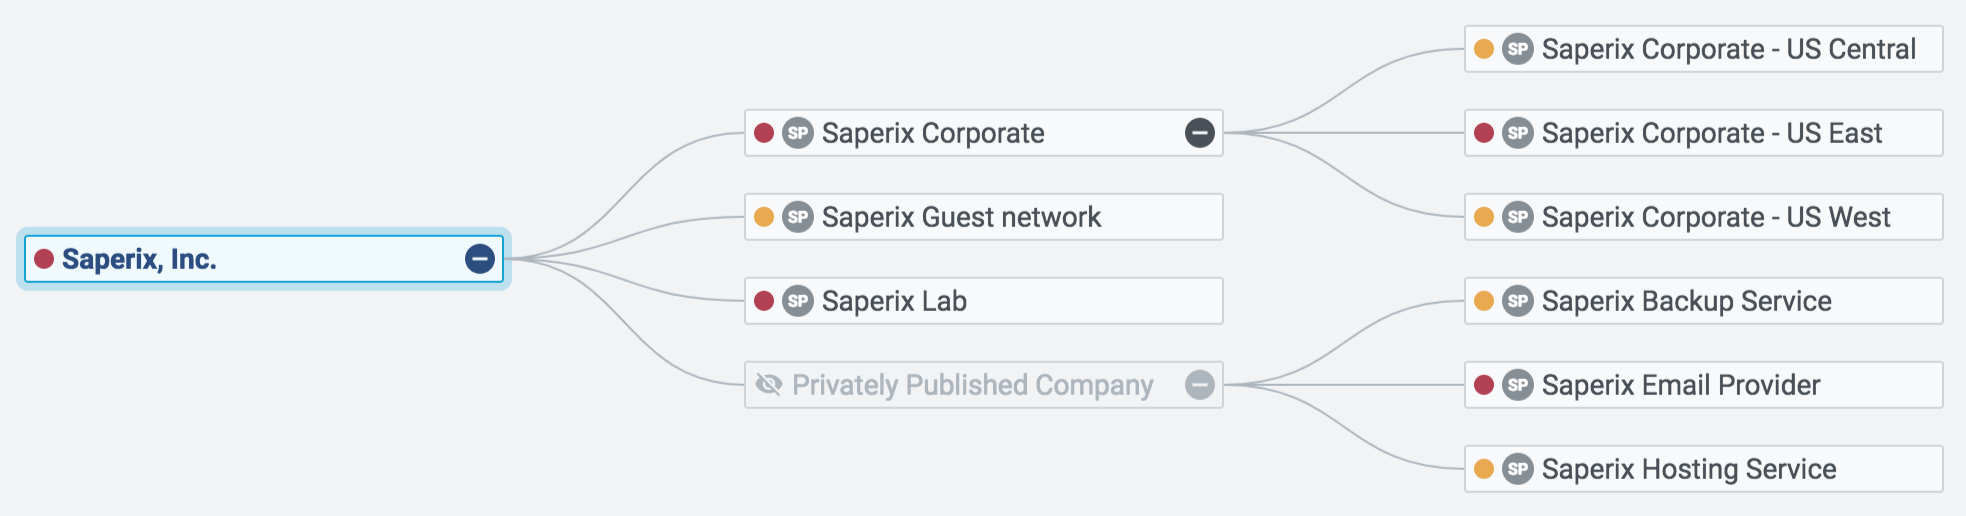 The Saperix, Inc. Ratings Tree